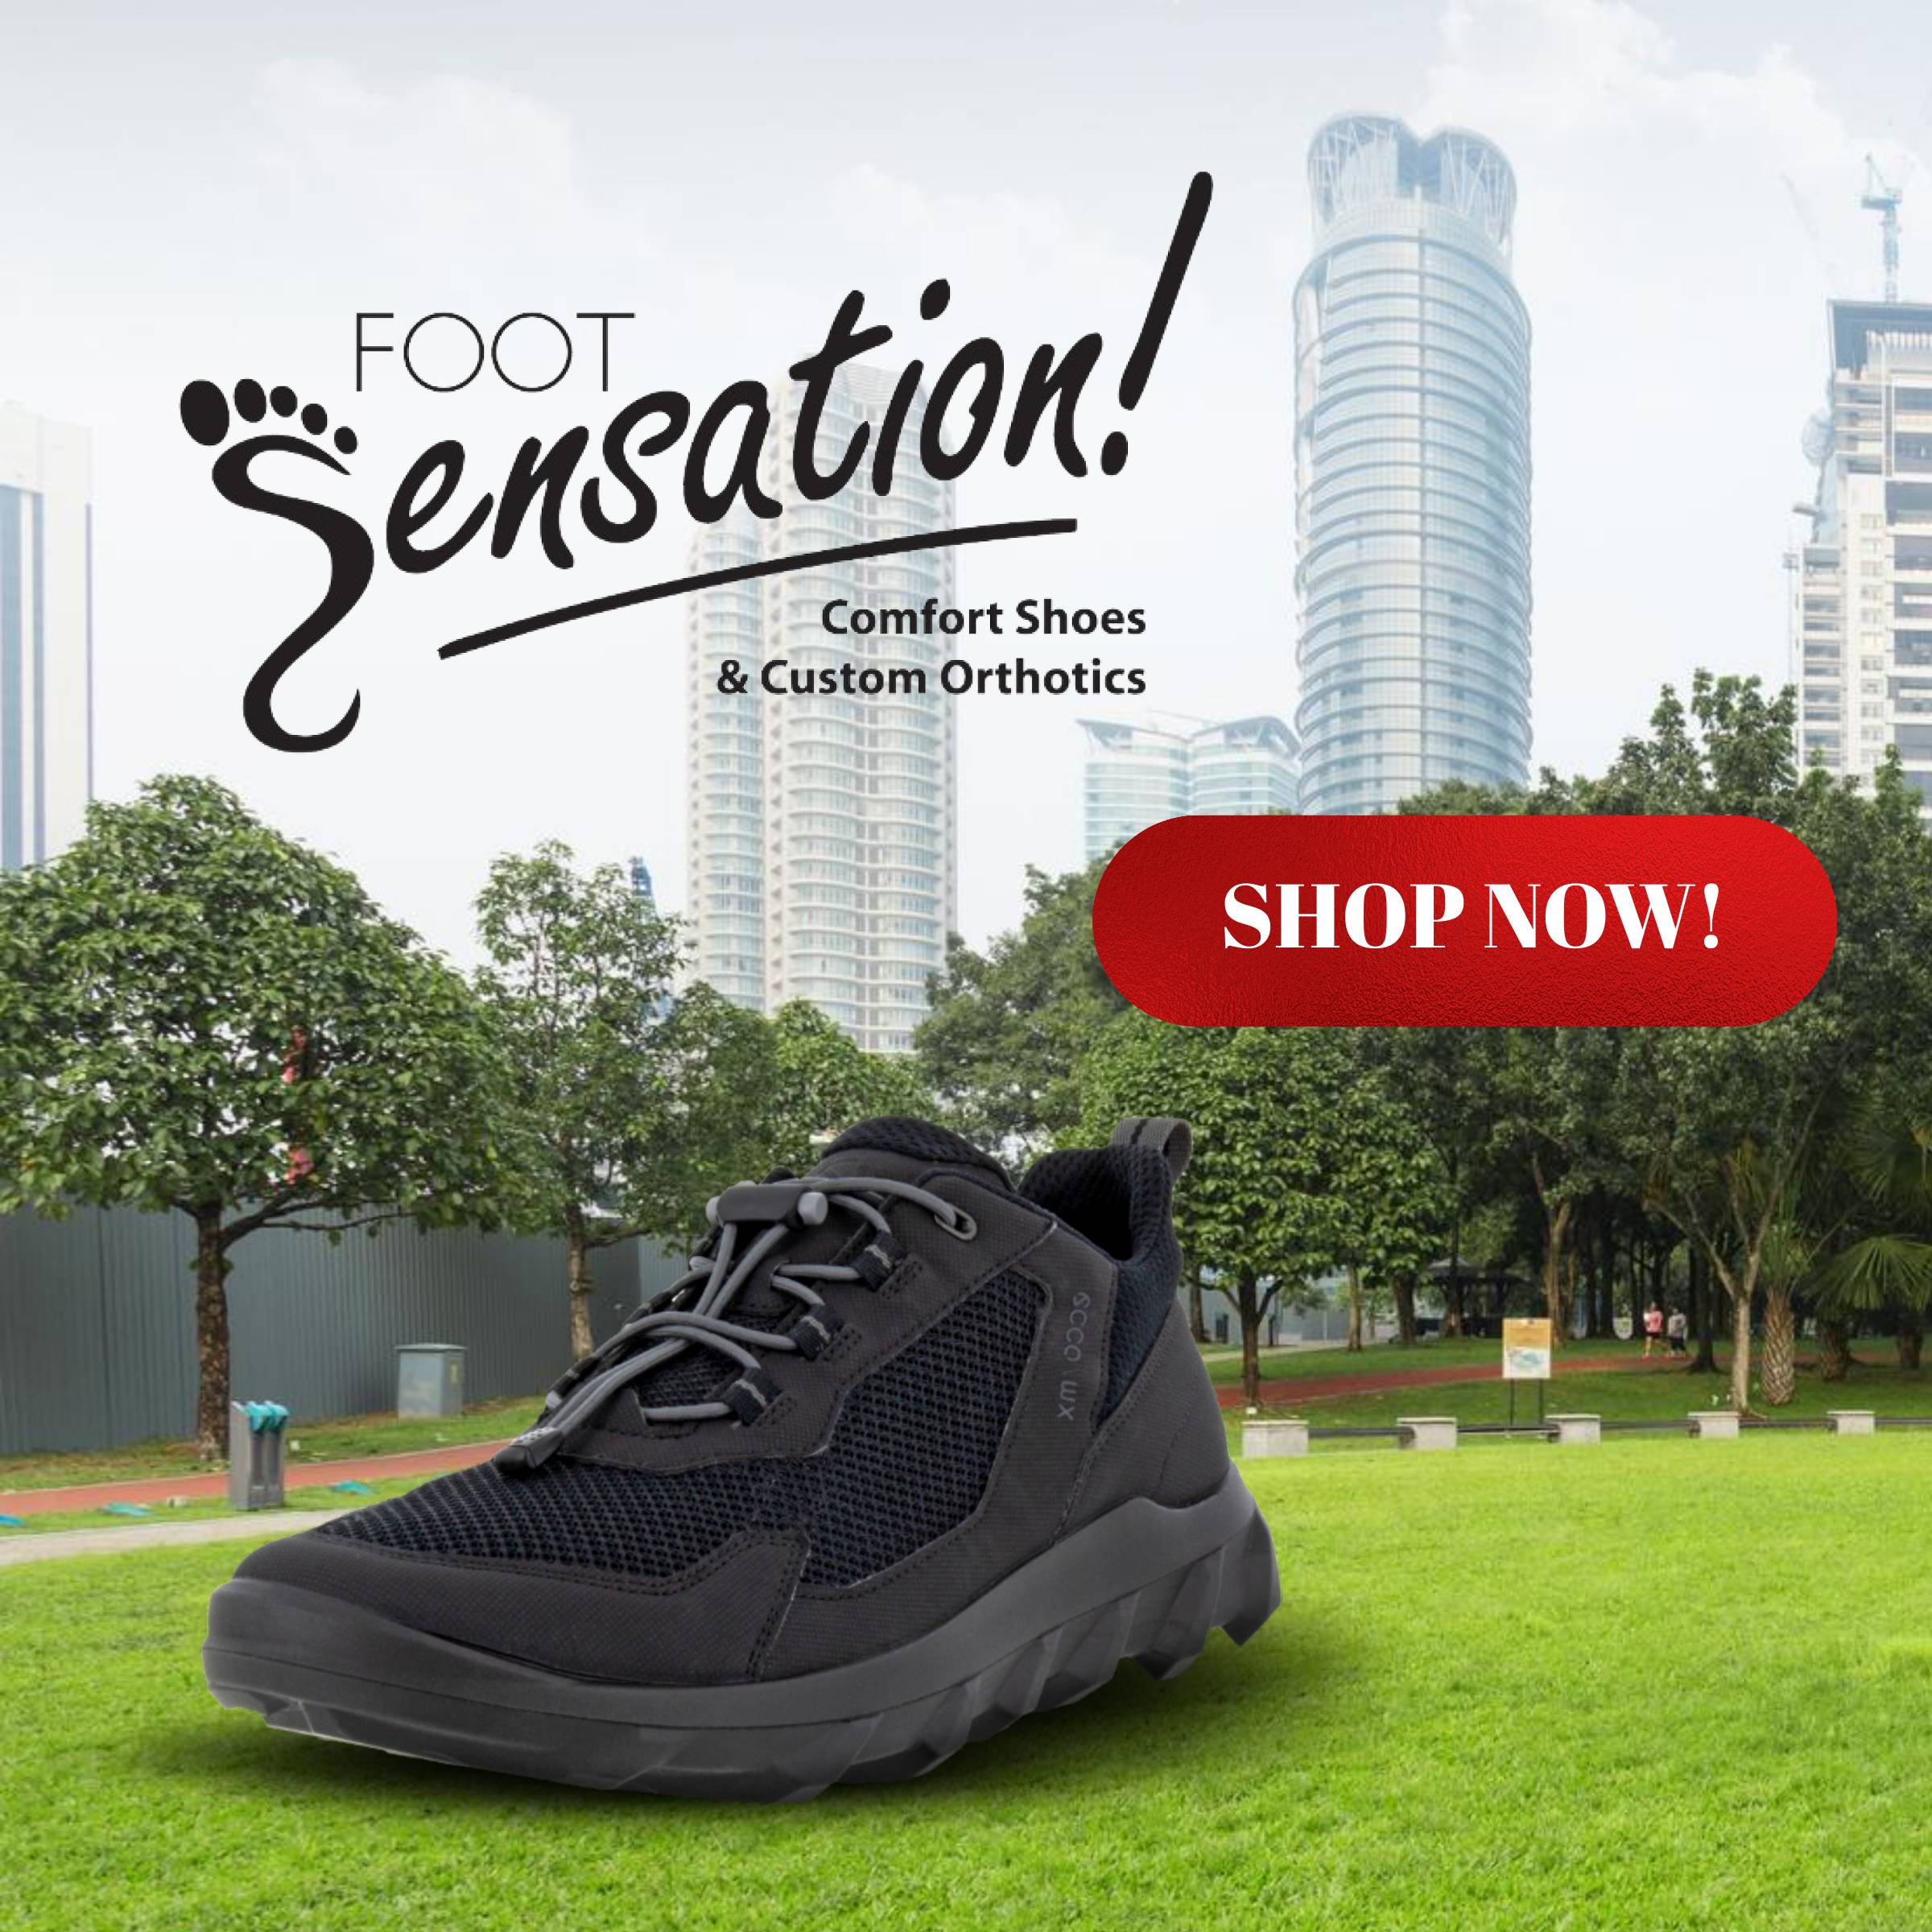 Foot Sensation Comfort Shoes & Custom Orthotics - Foot Sensation